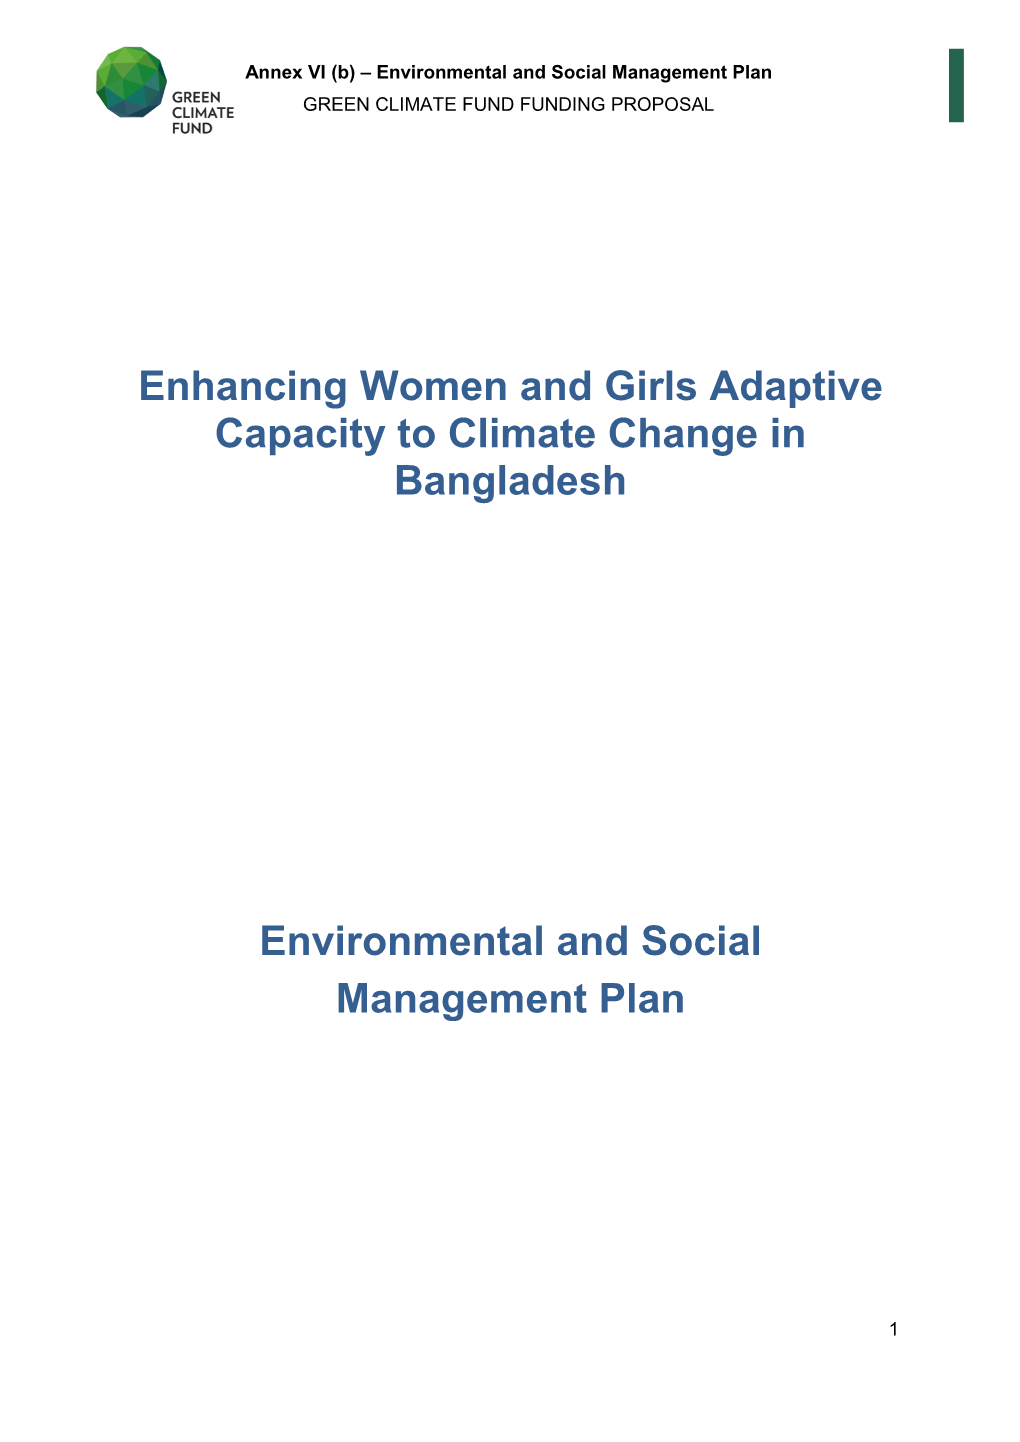 Enhancing Women and Girls Adaptive Capacity to Climate Change in Bangladesh